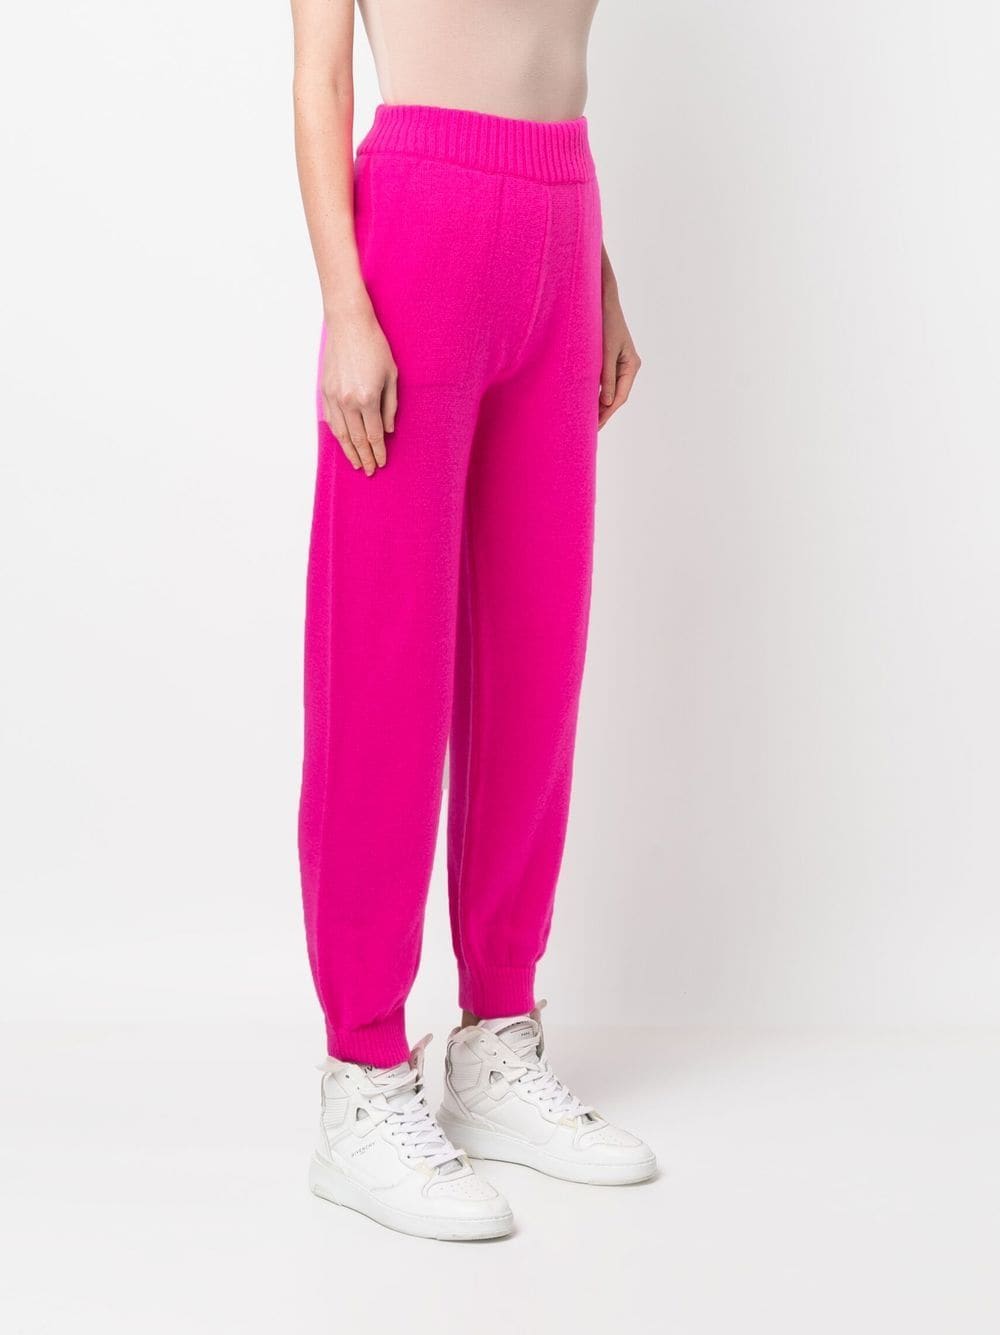 a women wearing pink pants